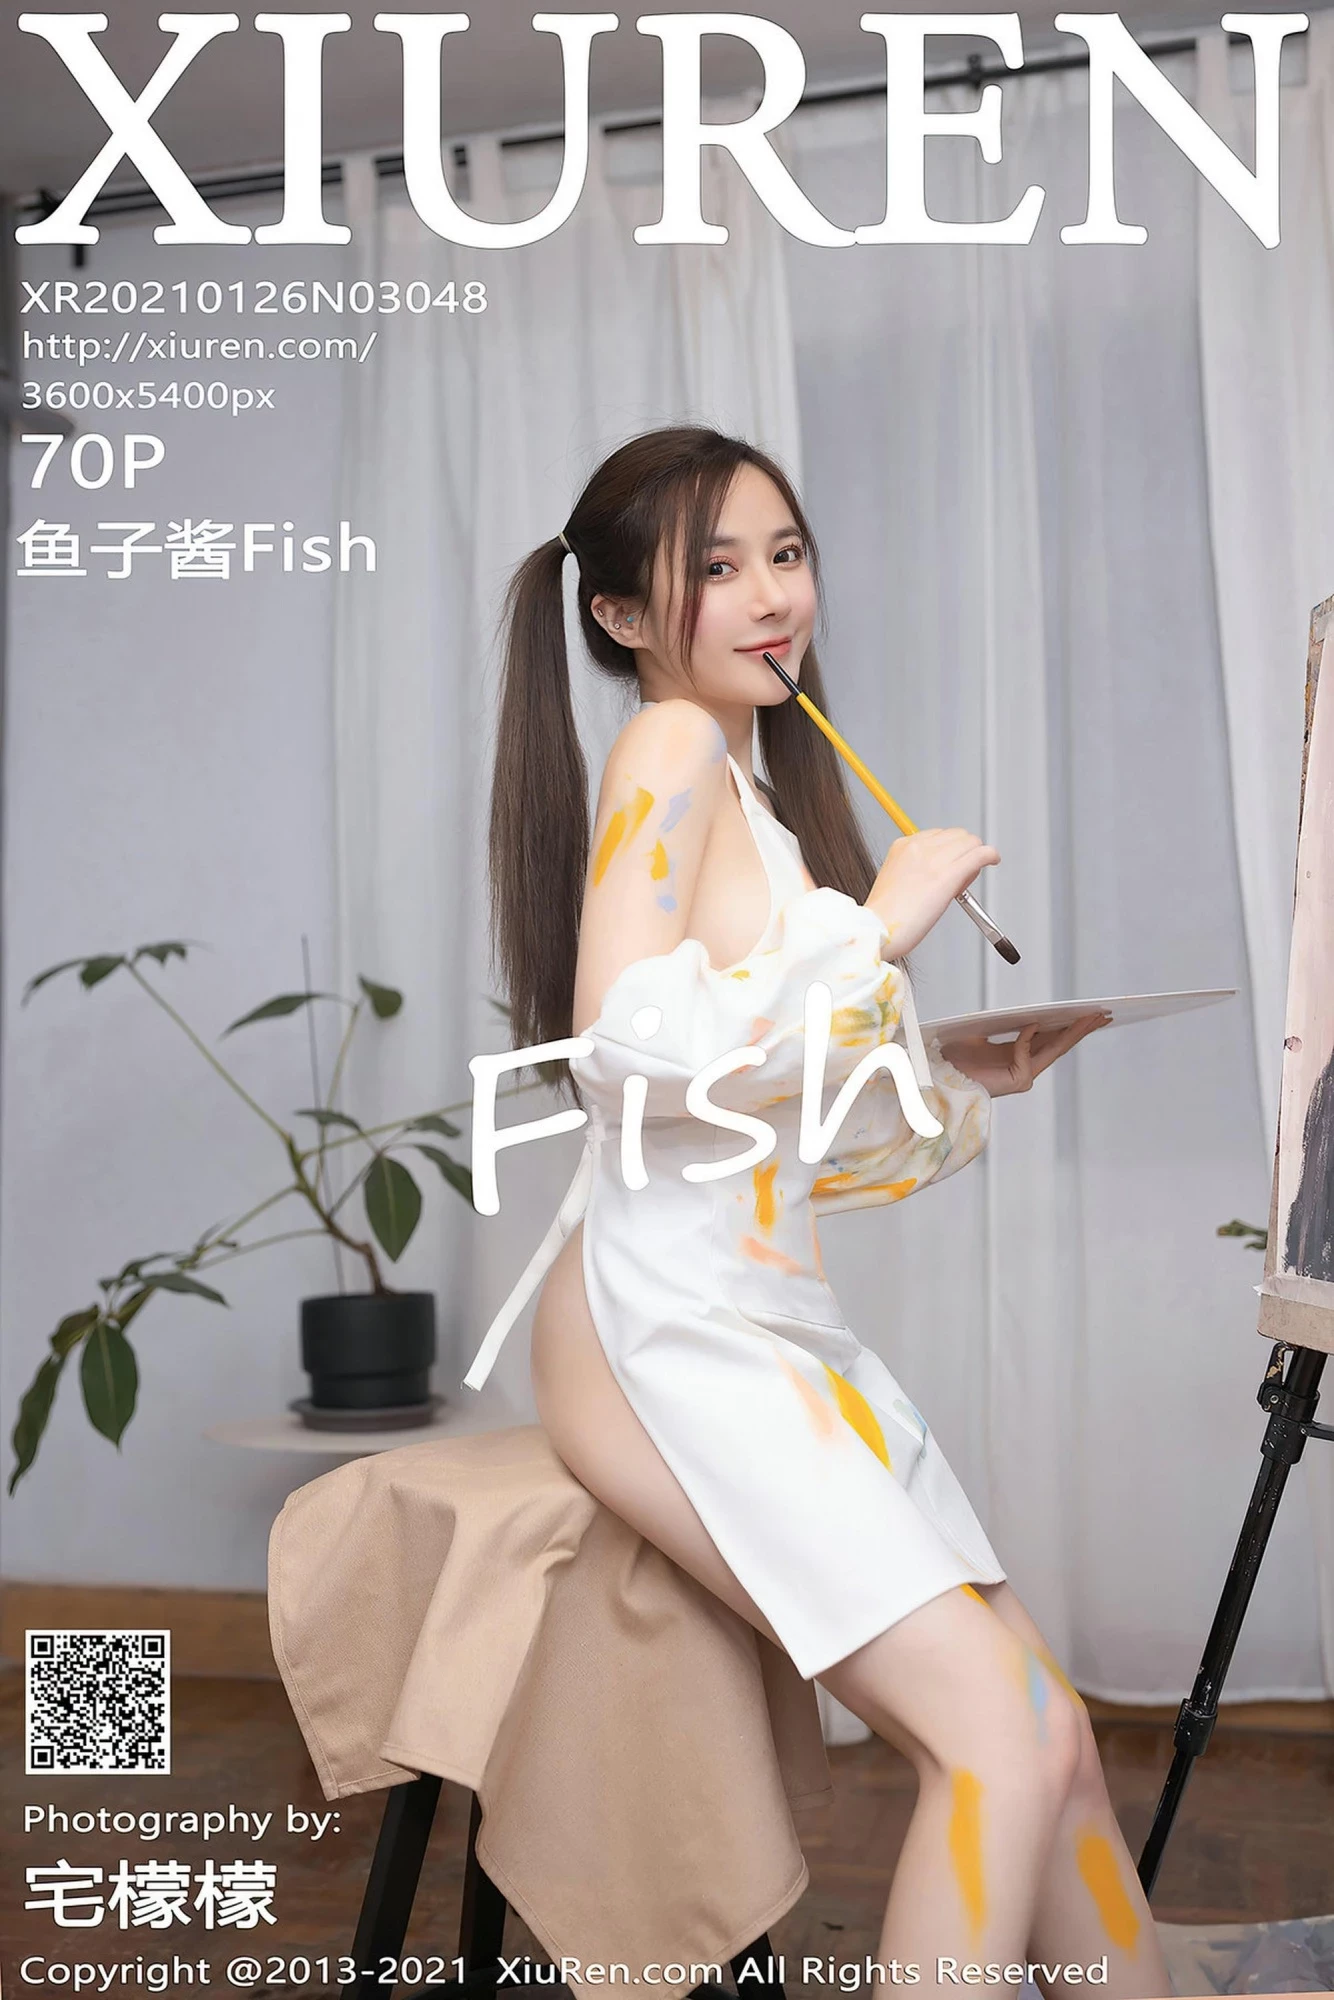 No3048 魚子醬Fish-1